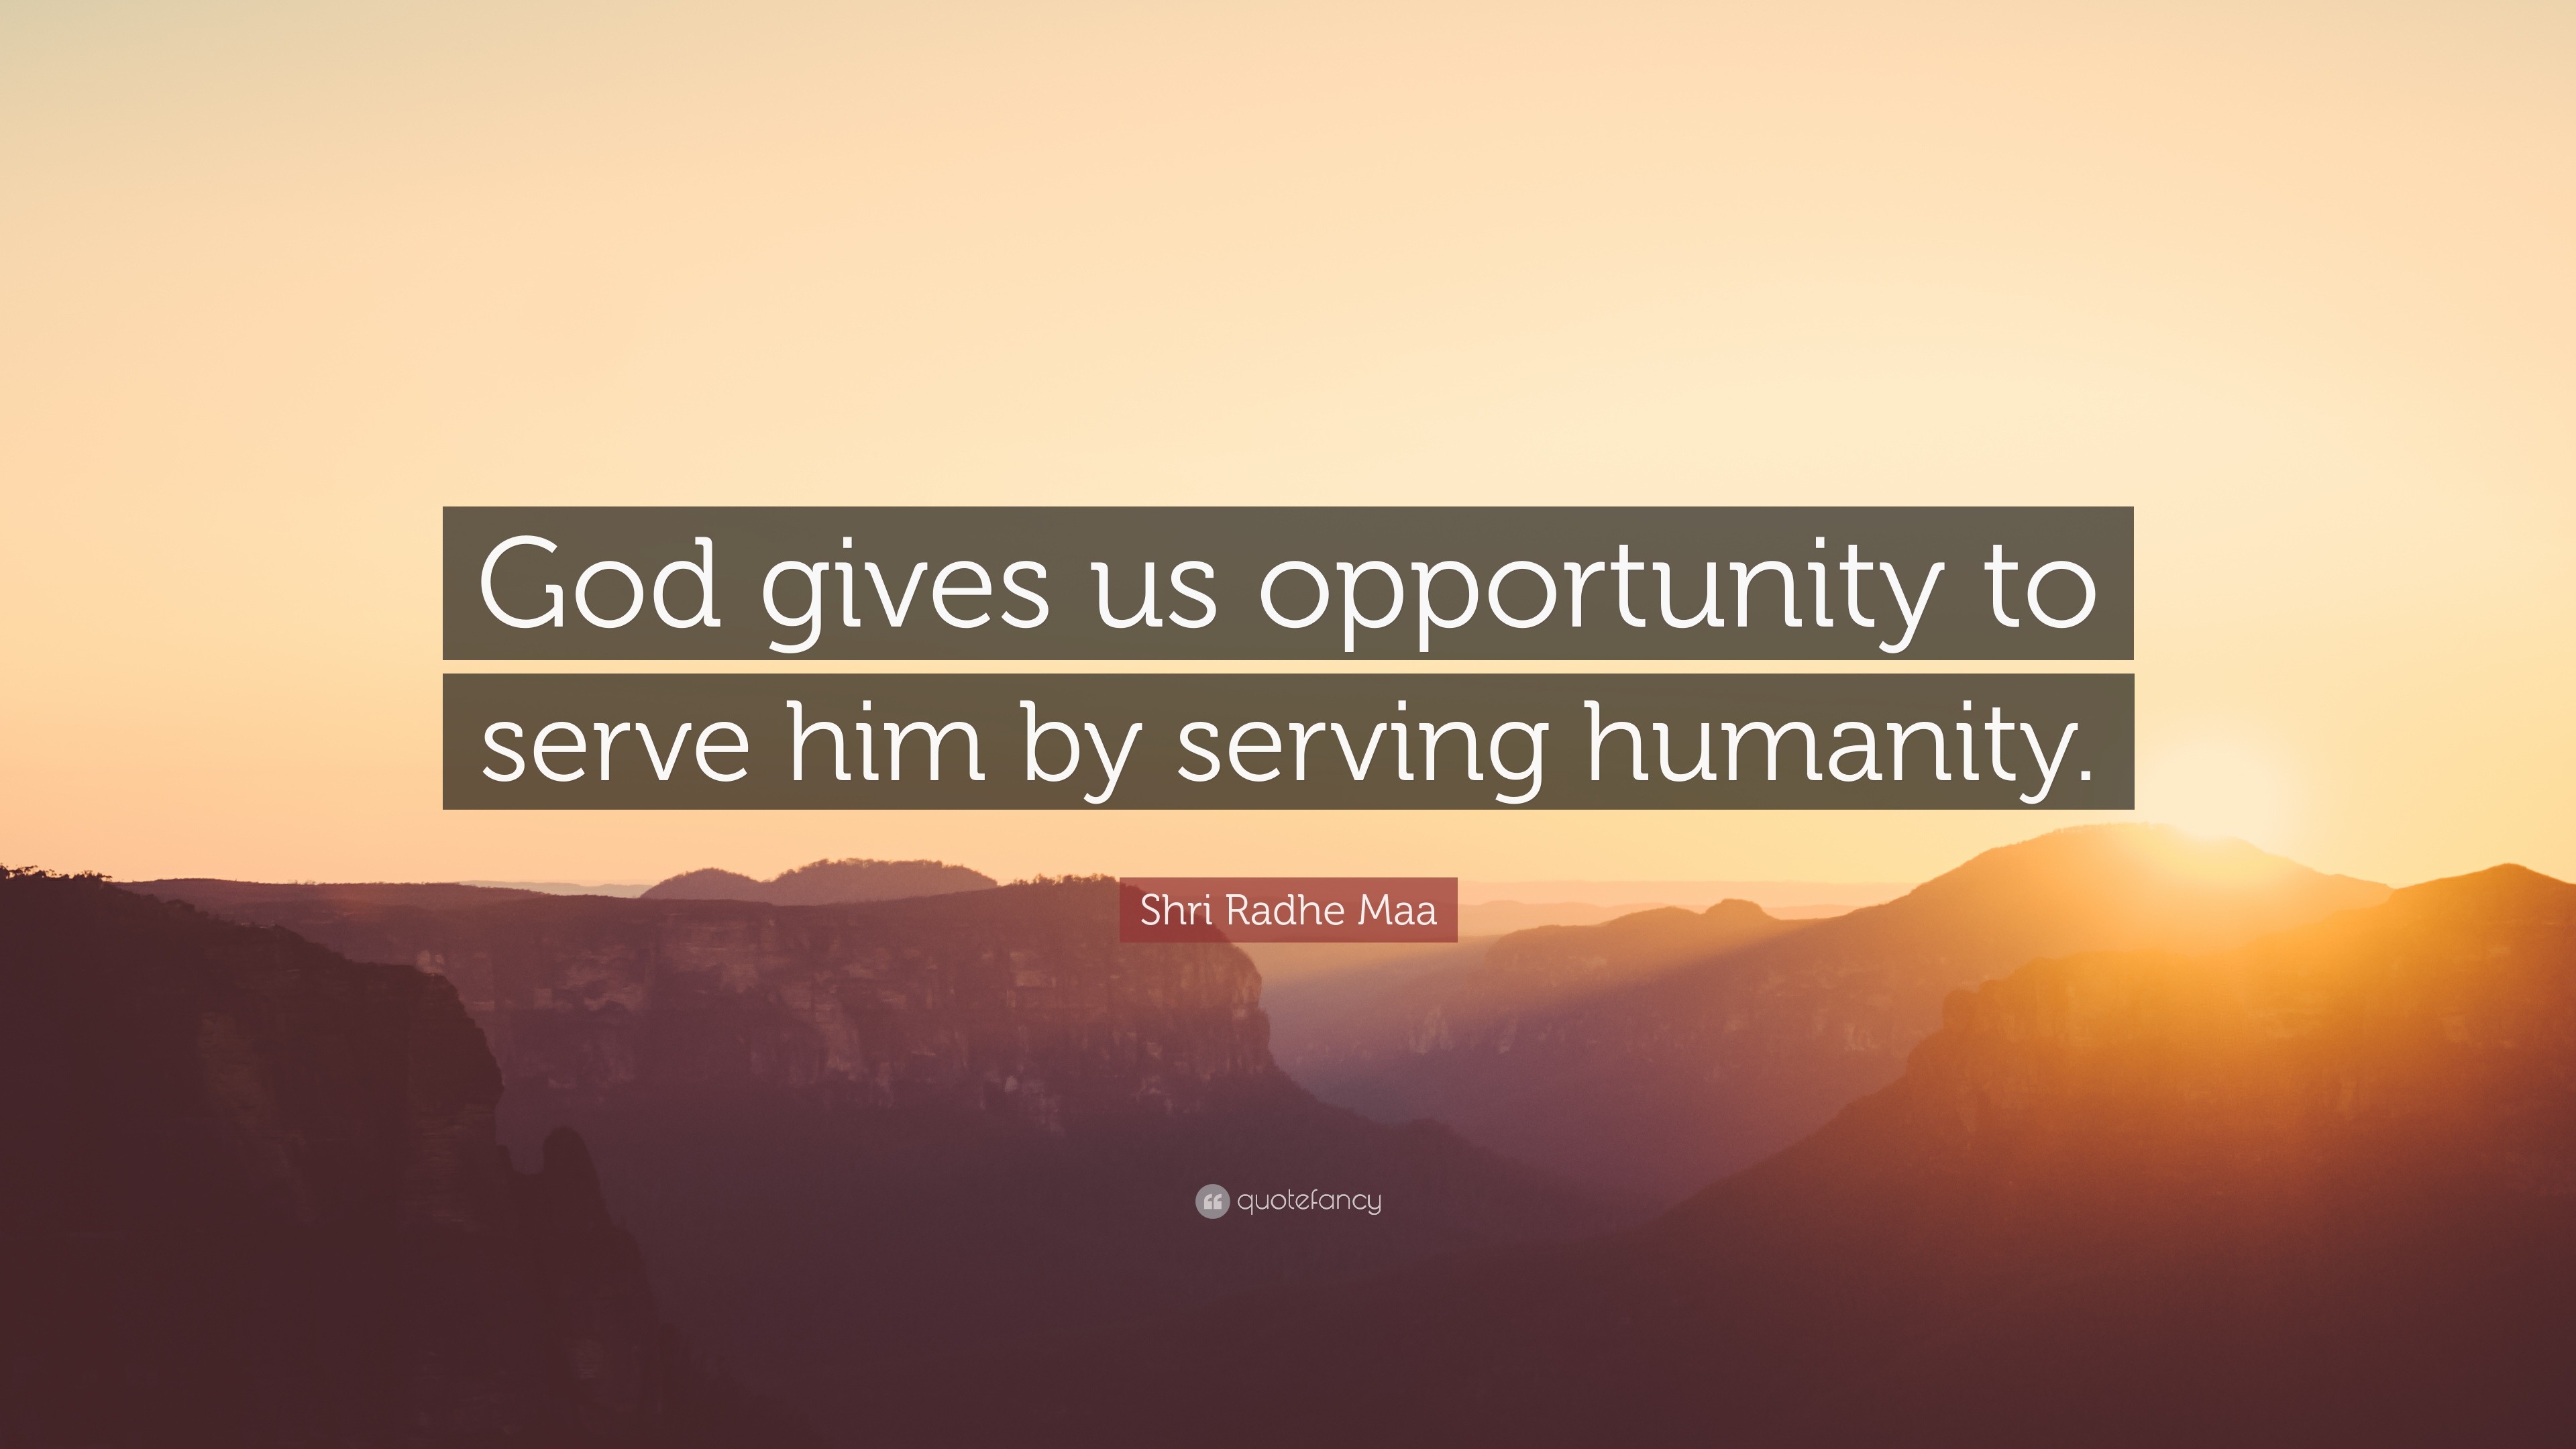 essay on serving humanity is serving god